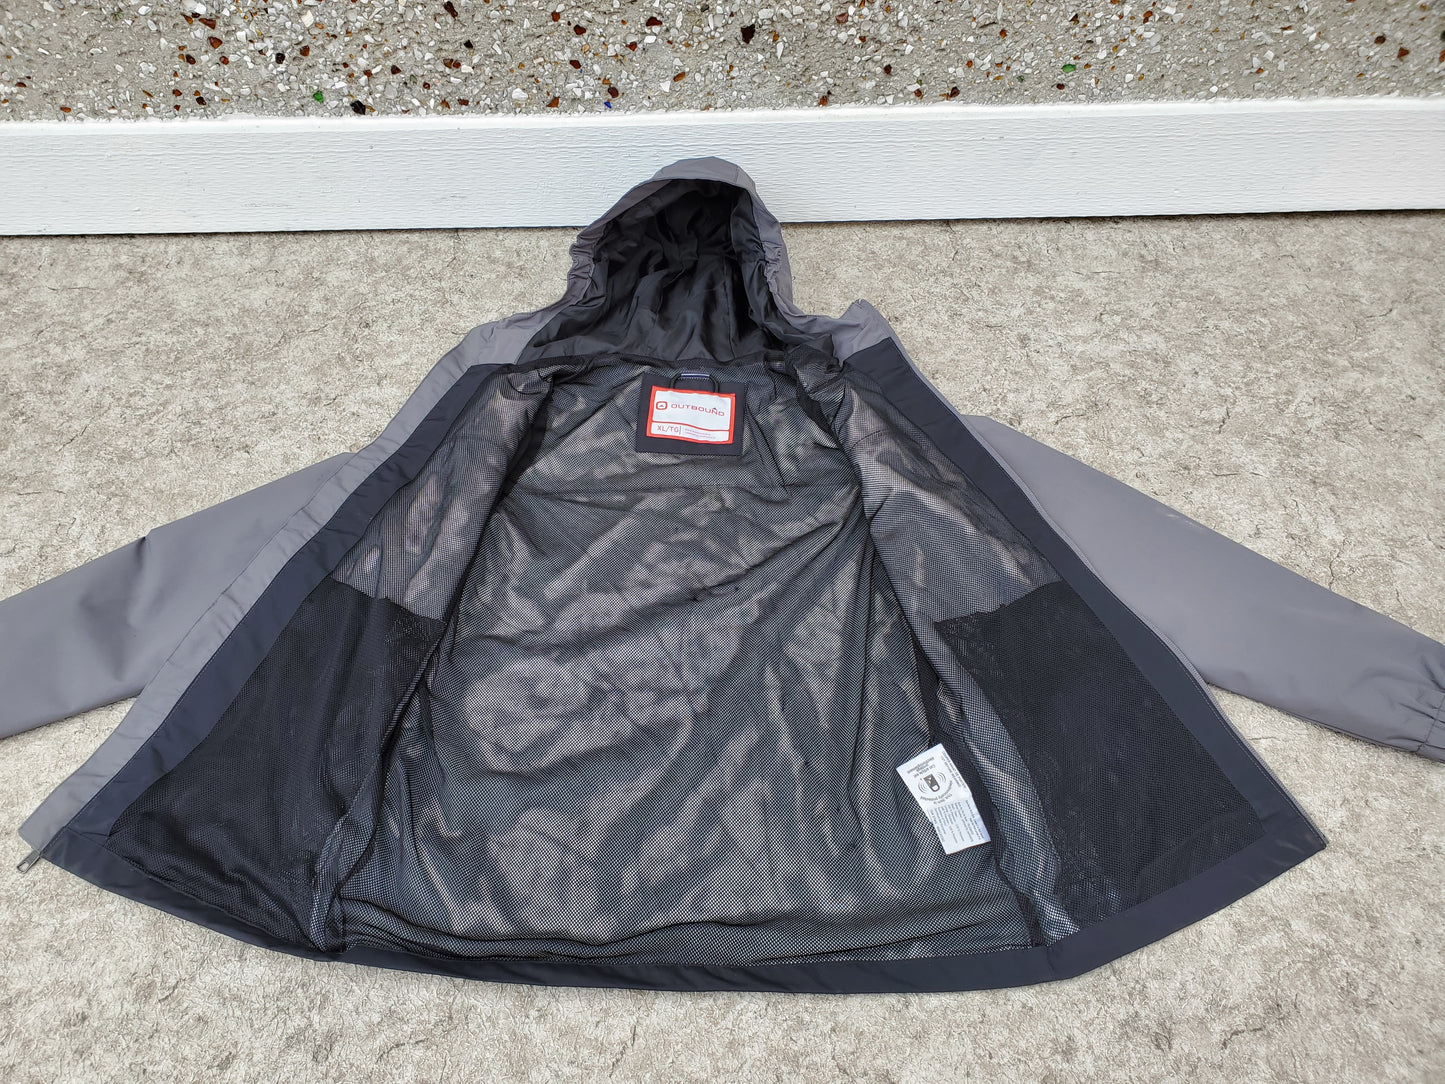 Rain Coat Child Size 14-16 Outbound Black Grey New Demo Model